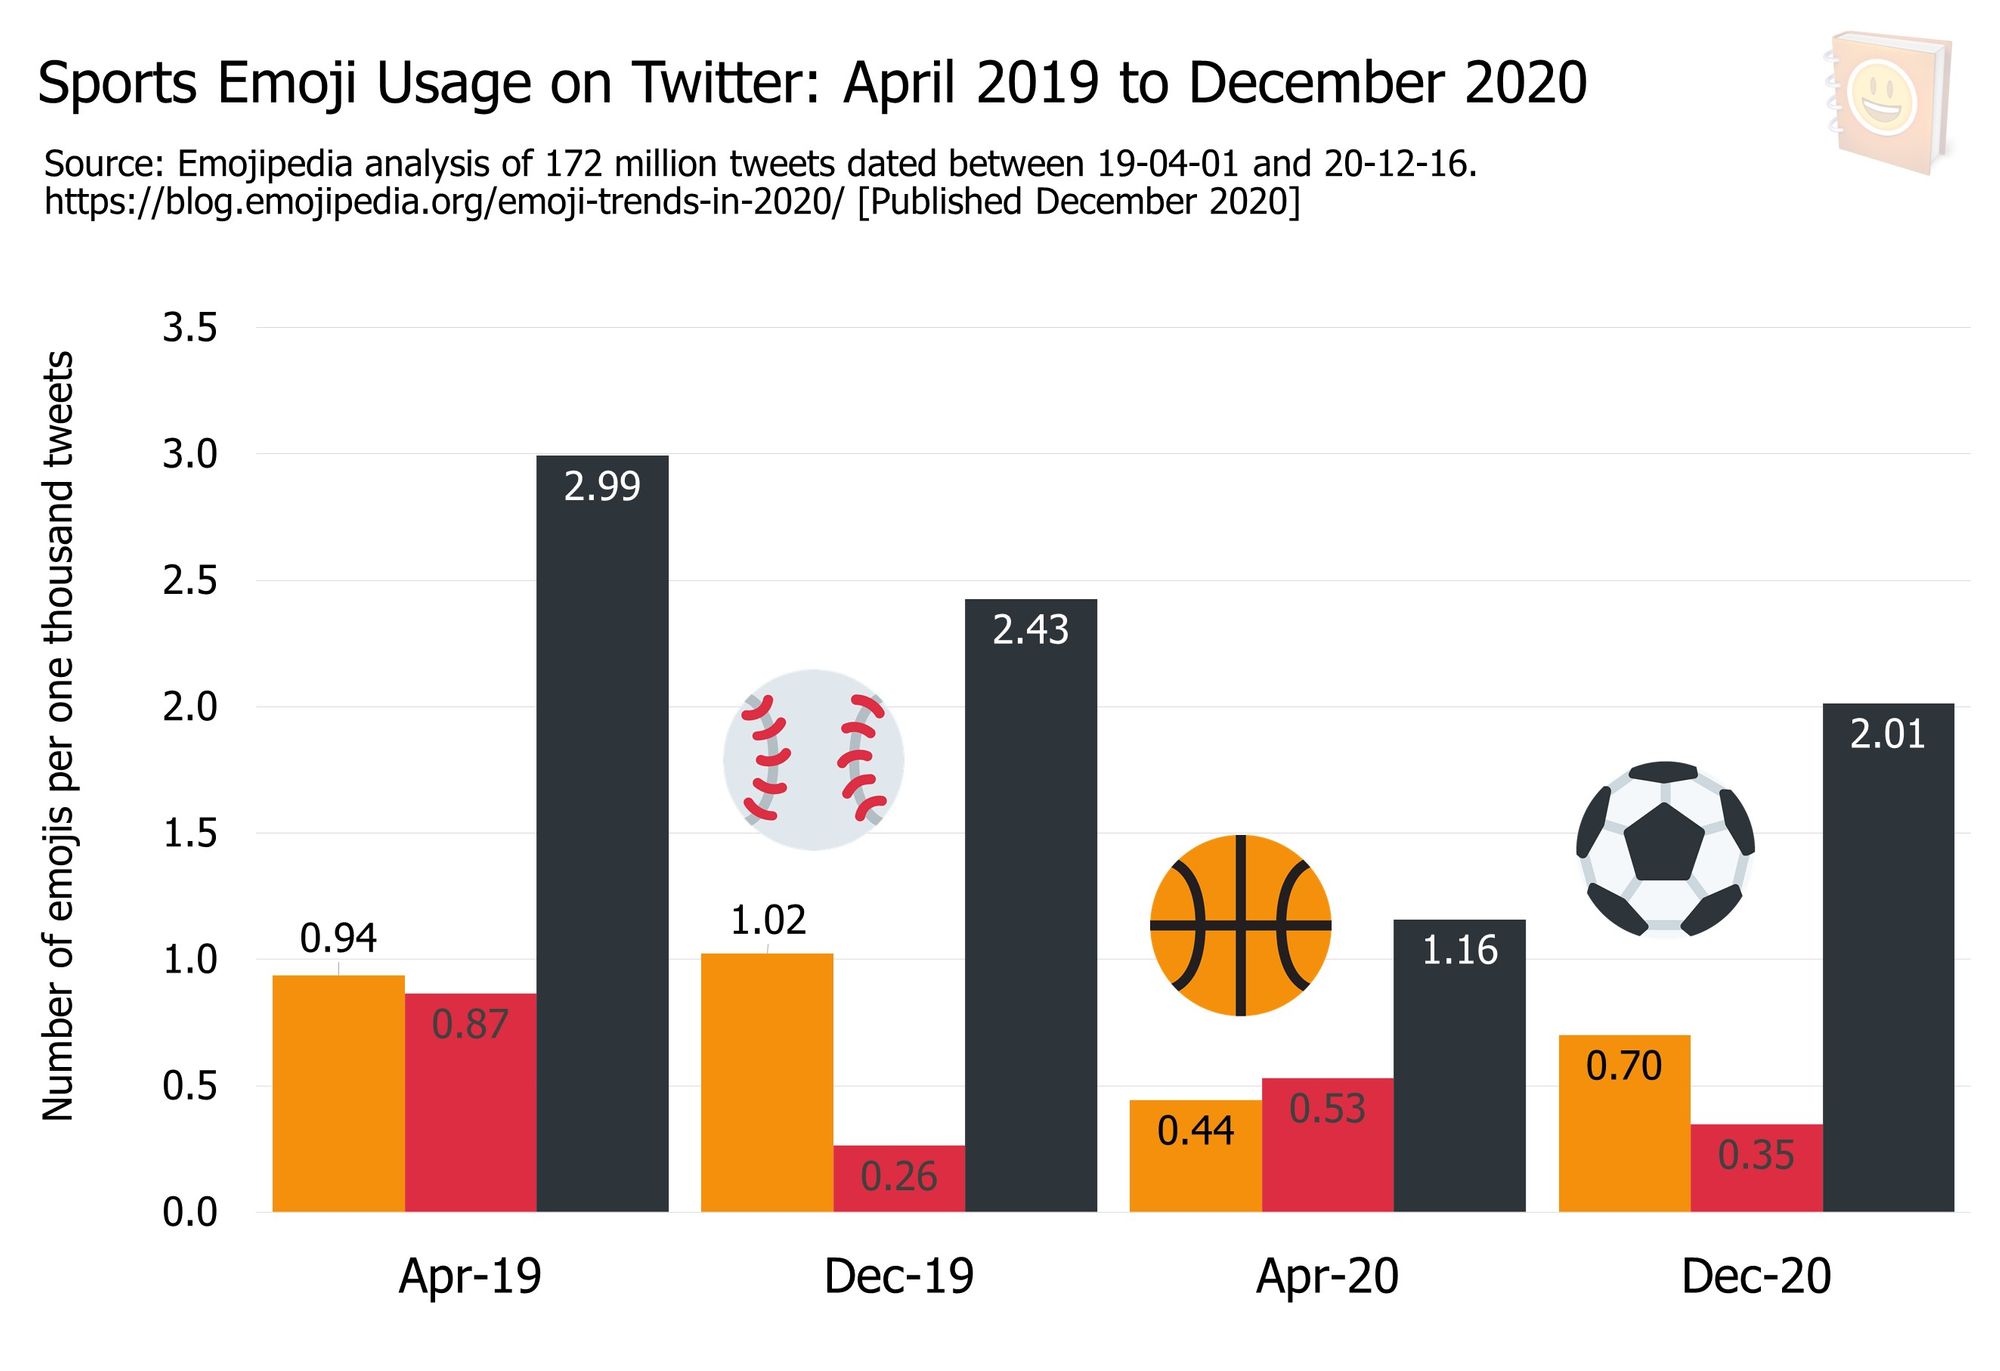 Emoji-Trends-In-2020---Sports-Emoji-Usage-on-Twitter-April-2019-to-December-2020